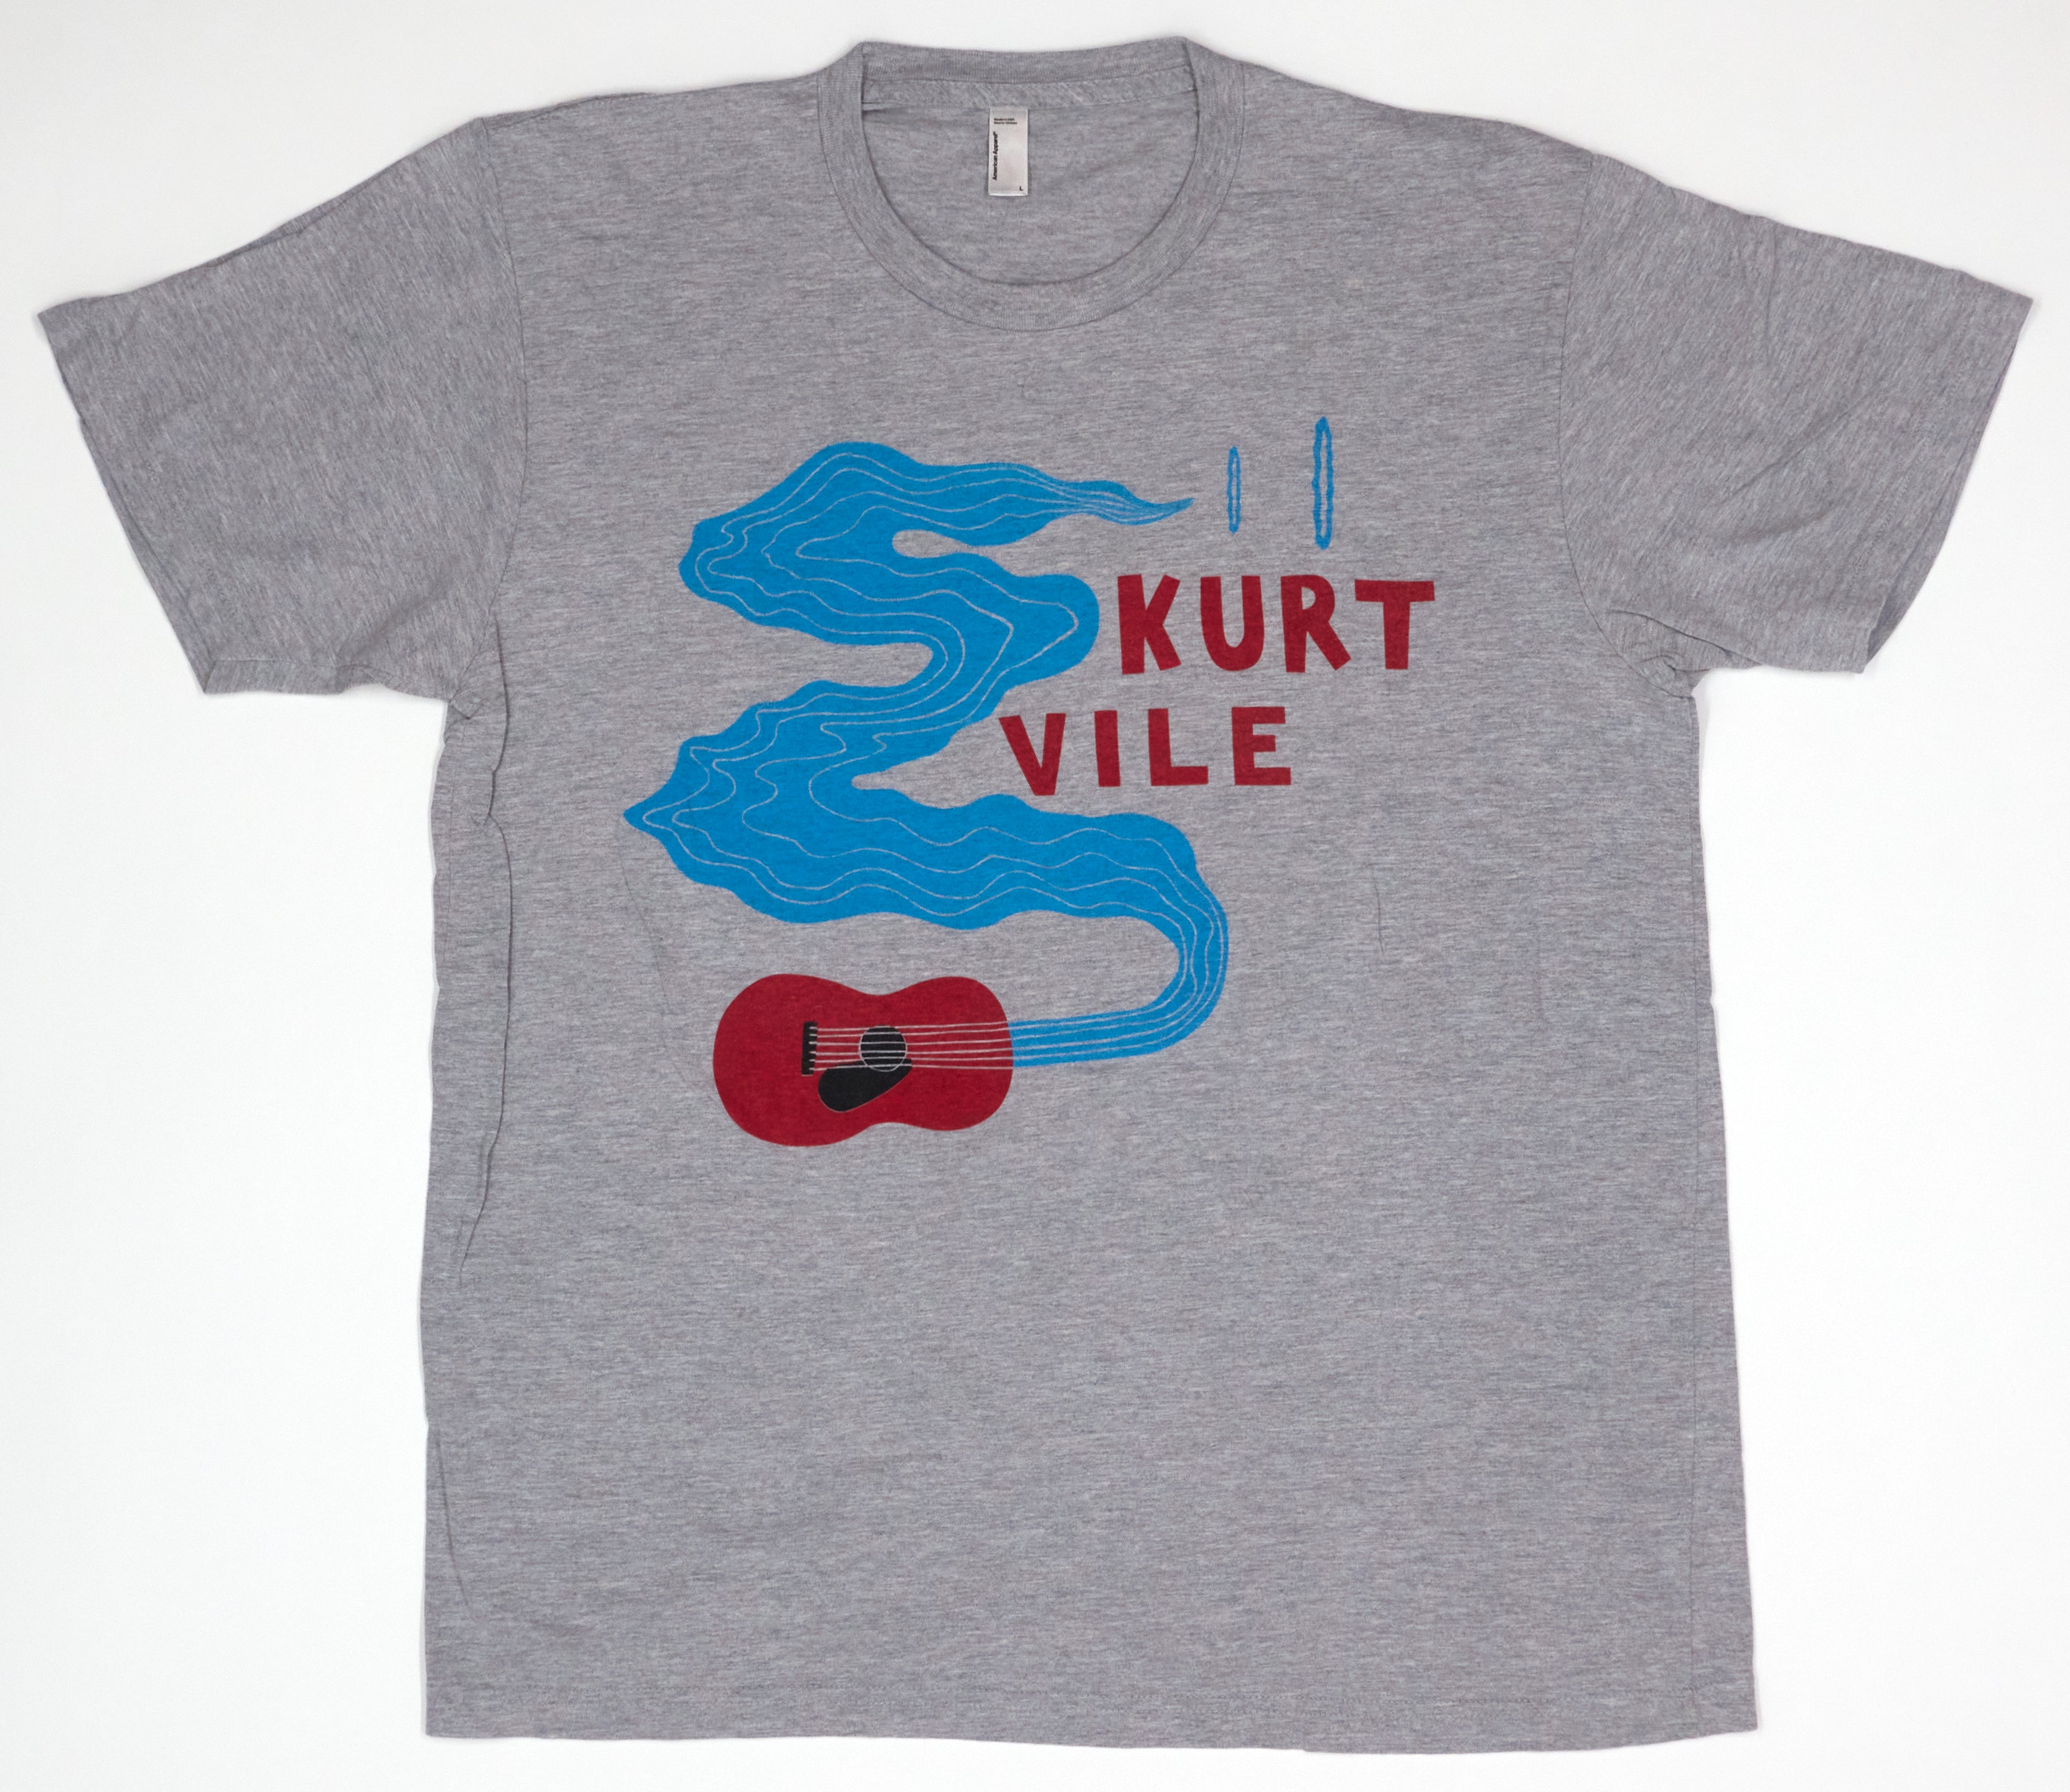 Kurt Vile – Guitar Smoke by ESPO Steve Powers 2013 Tour Shirt Size Large